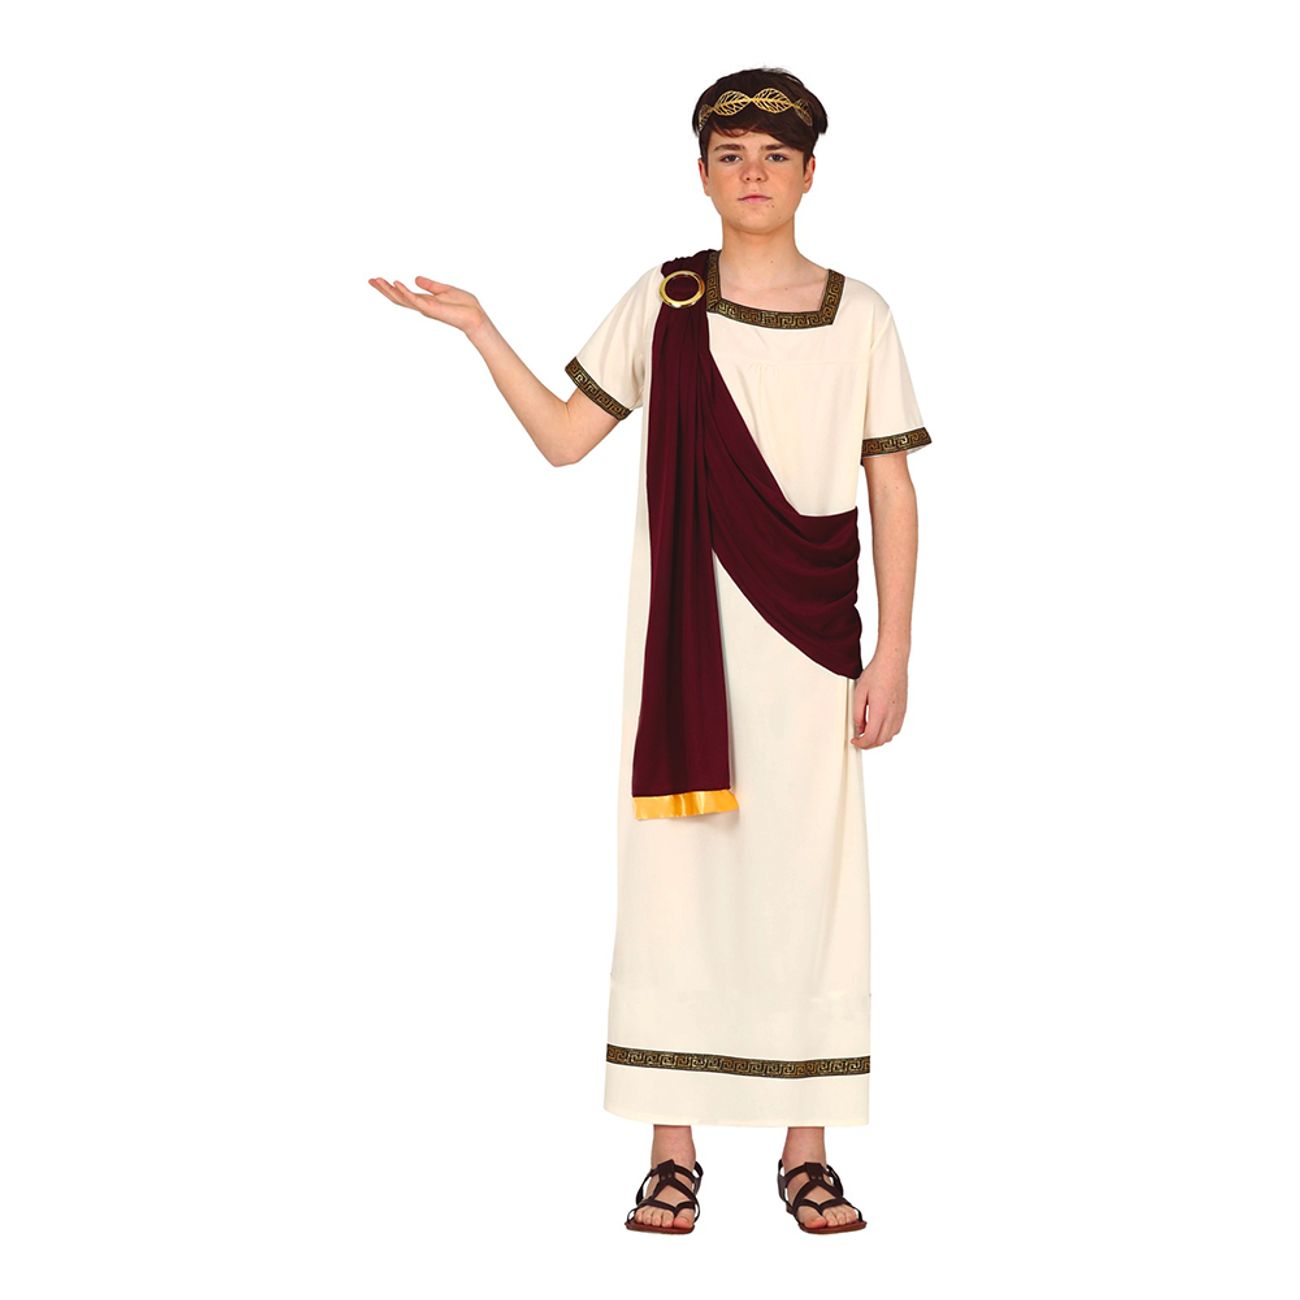 romersk-kejsare-teen-maskeraddrakt-76737-1